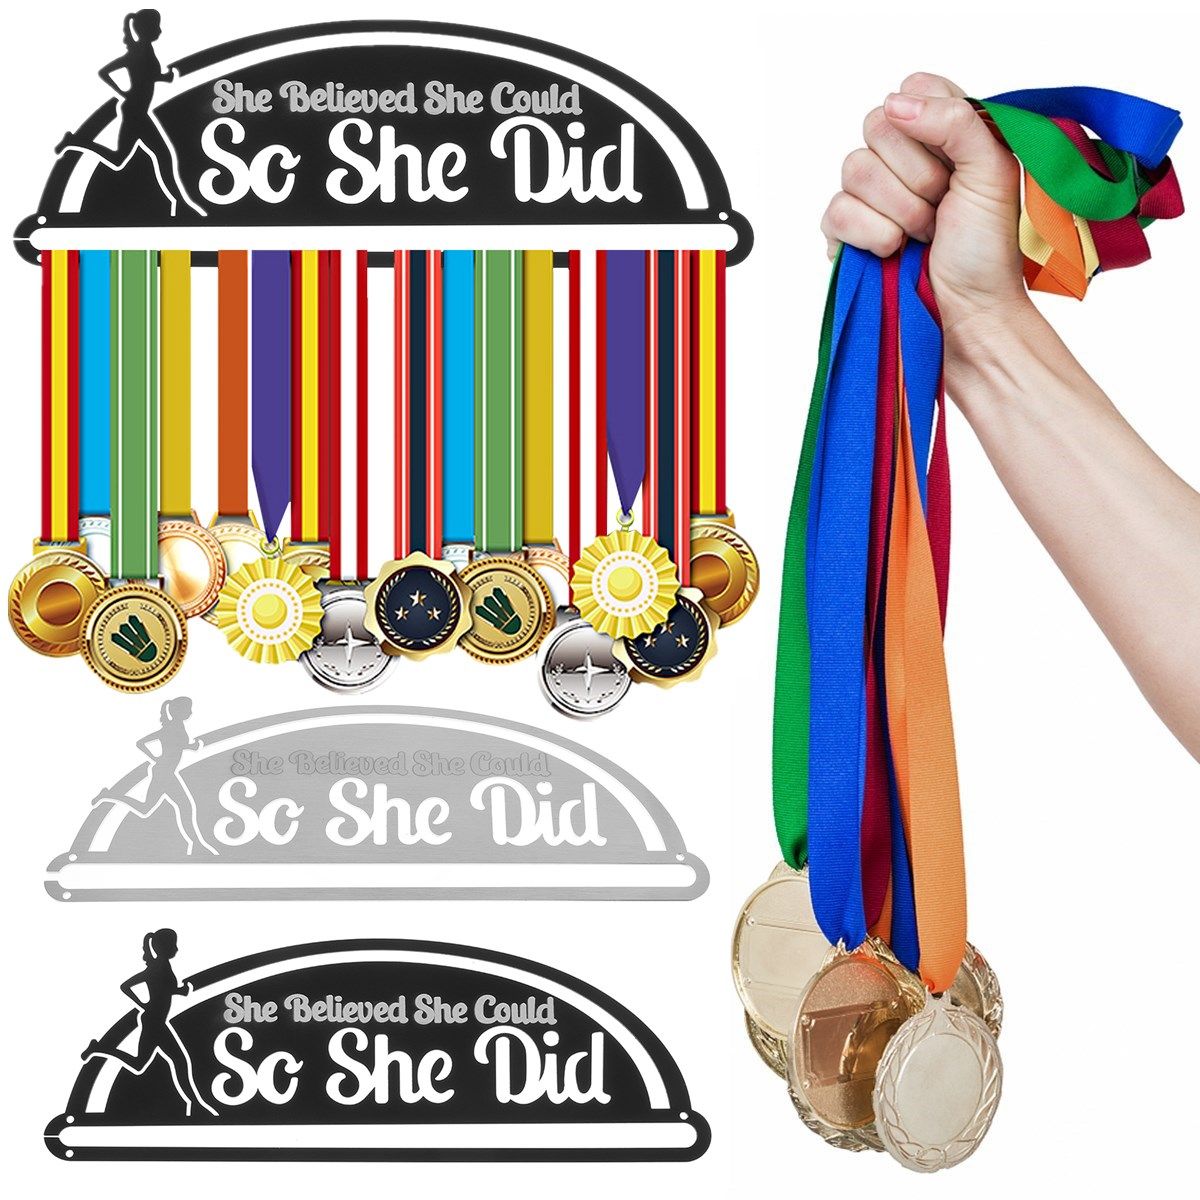 Stainless-Steel-Medal-Sporting-Gym-Running-Holder-Hanger-Awards-Display-Rack-Decorations-1631642